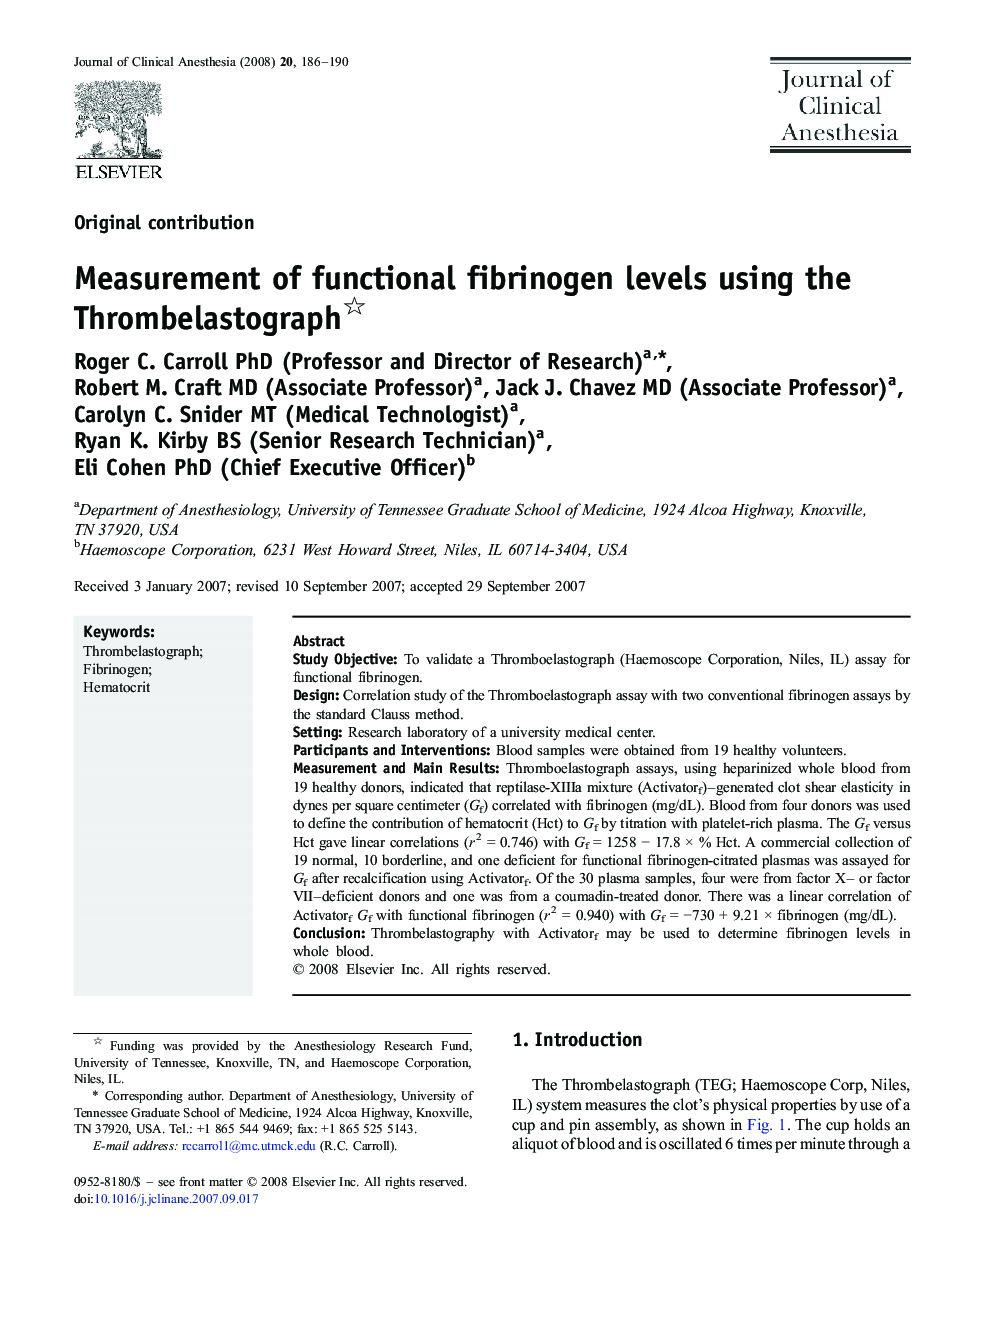 Measurement of functional fibrinogen levels using the Thrombelastograph 